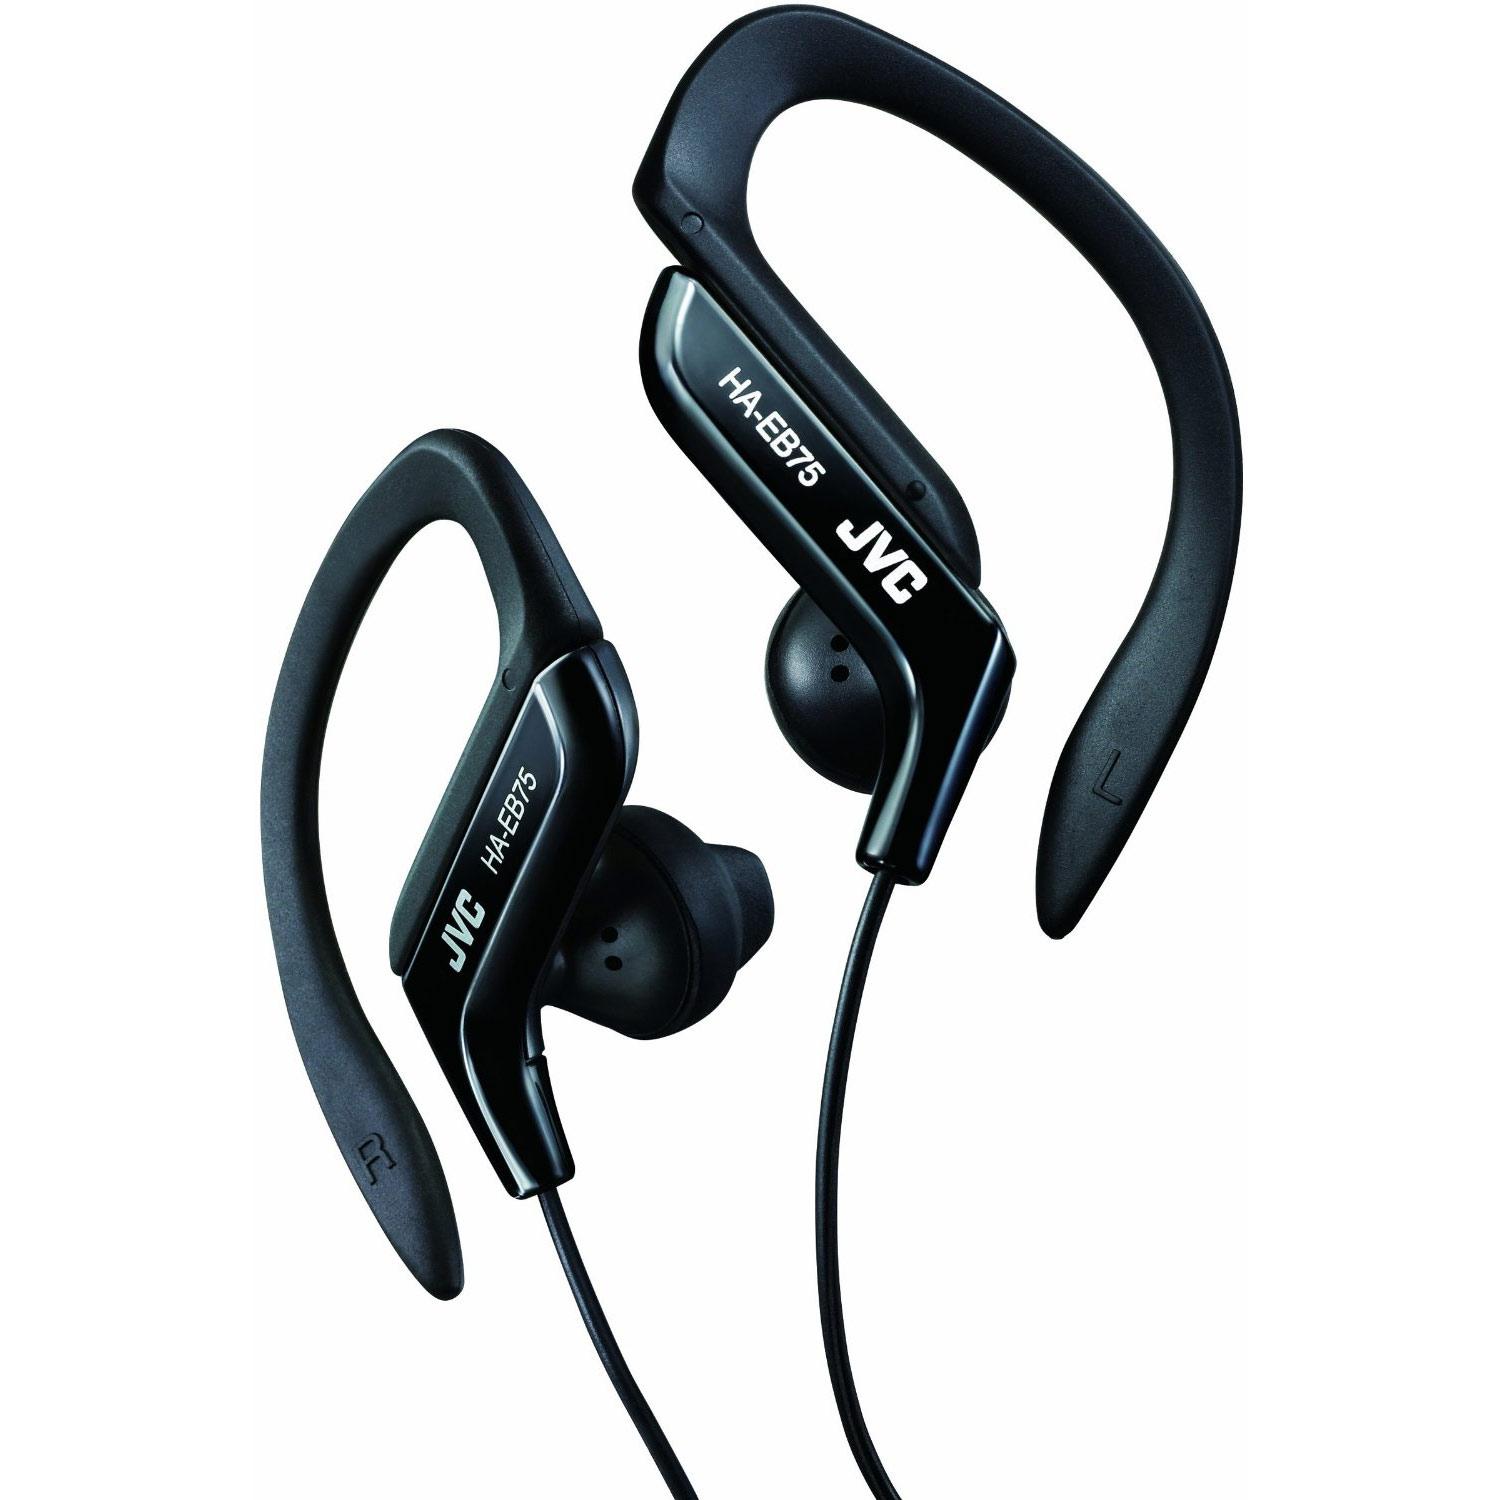 JVC Sports Headphones - Black (HA-EB75)